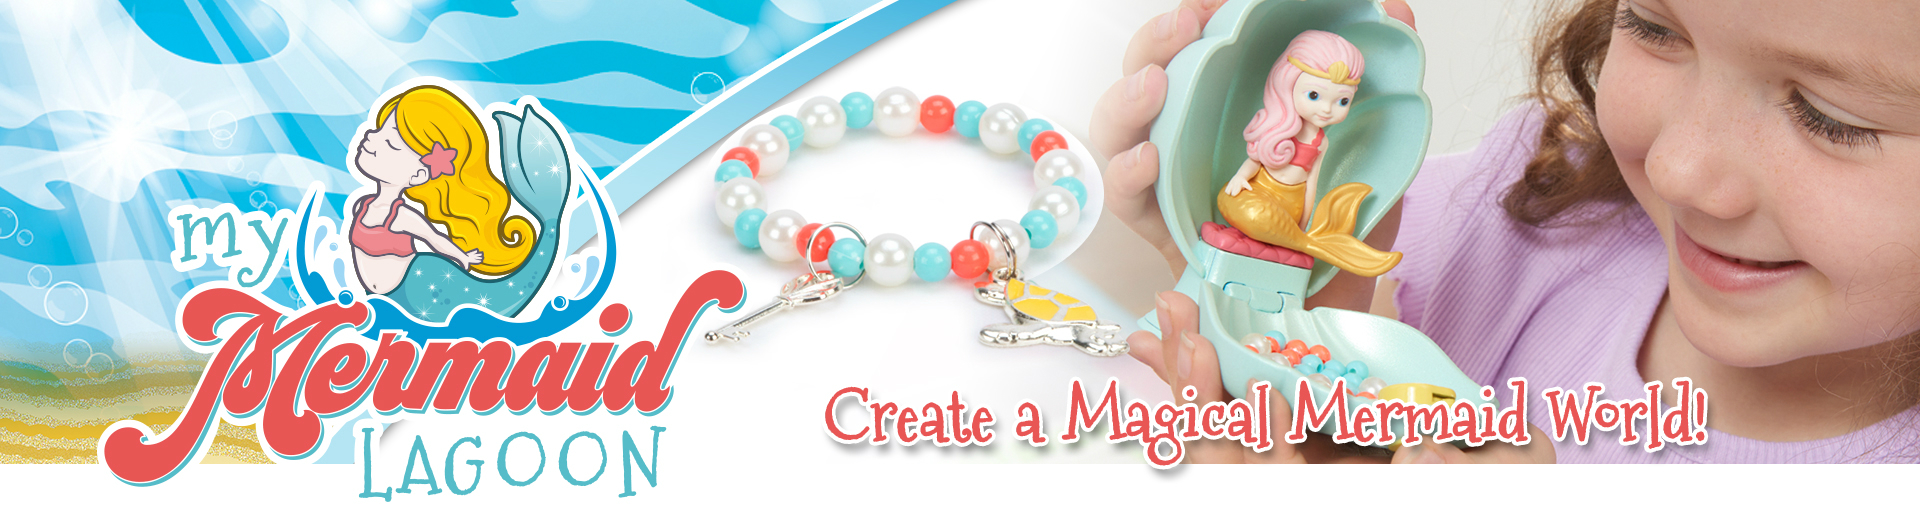 My Mermaid Lagoon Serena Interplay Christmas Gift Charm Bracelet for sale online 